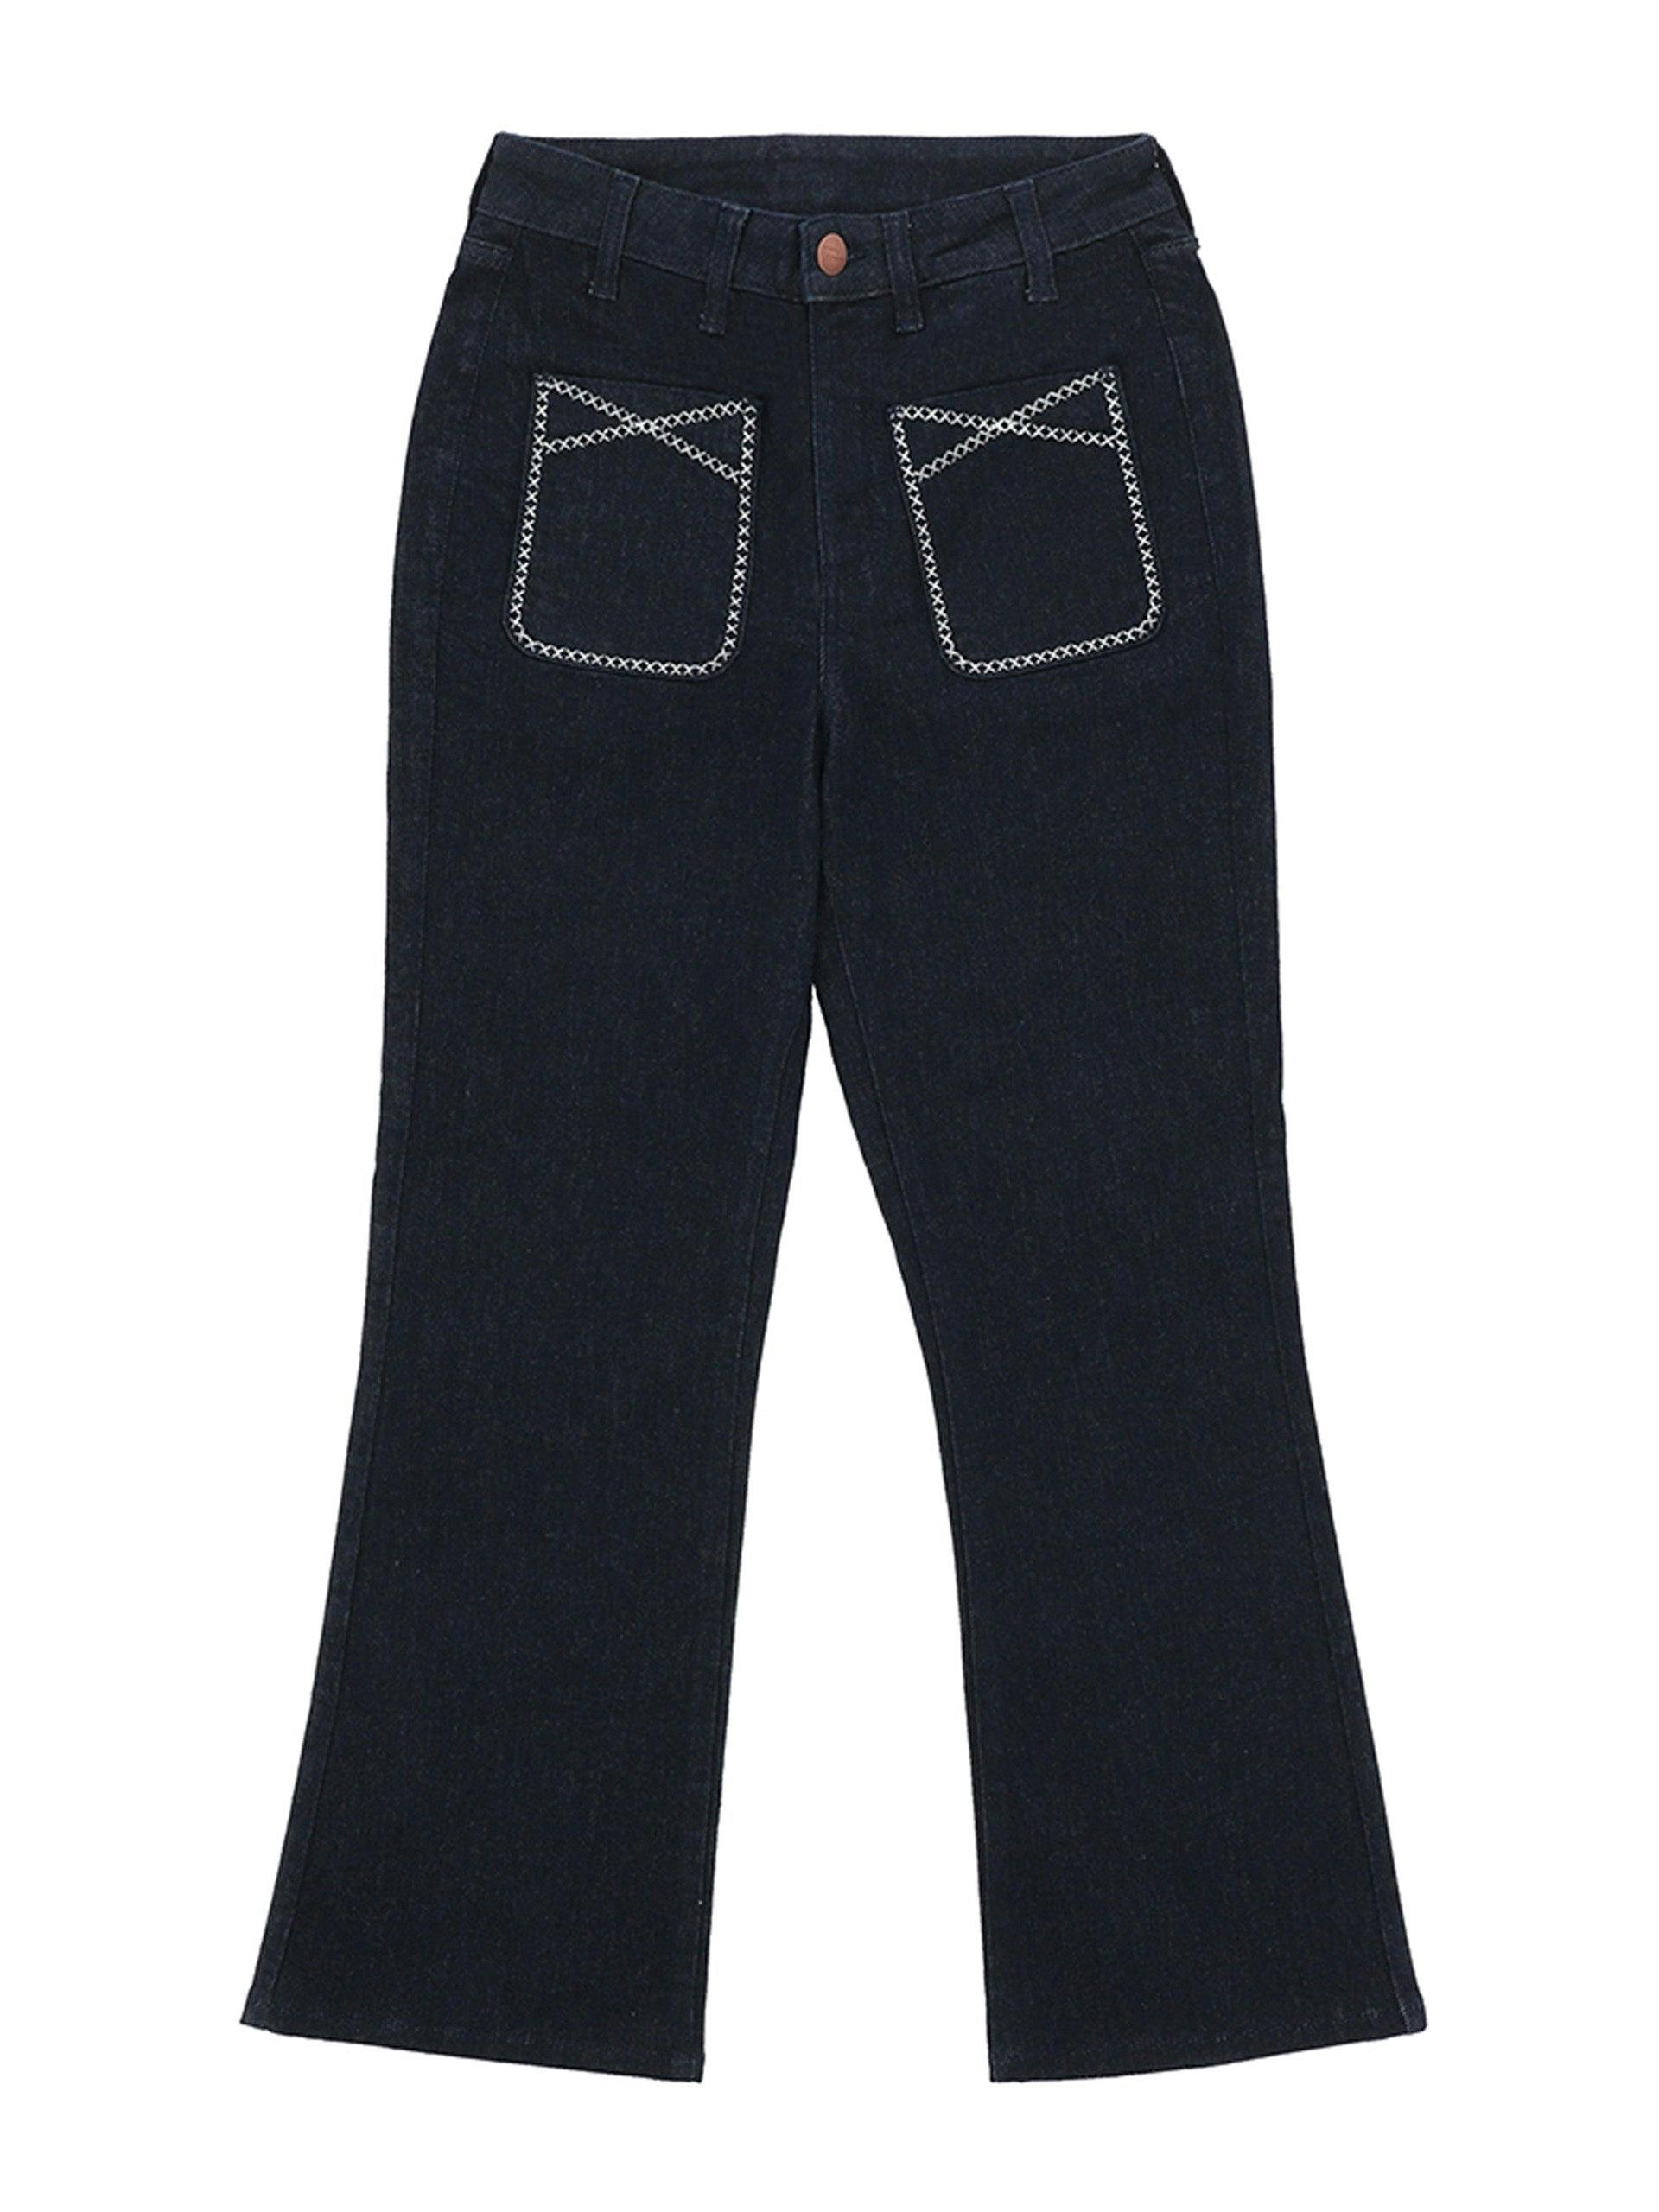 Cross stitch Gigi jeans in nightfall